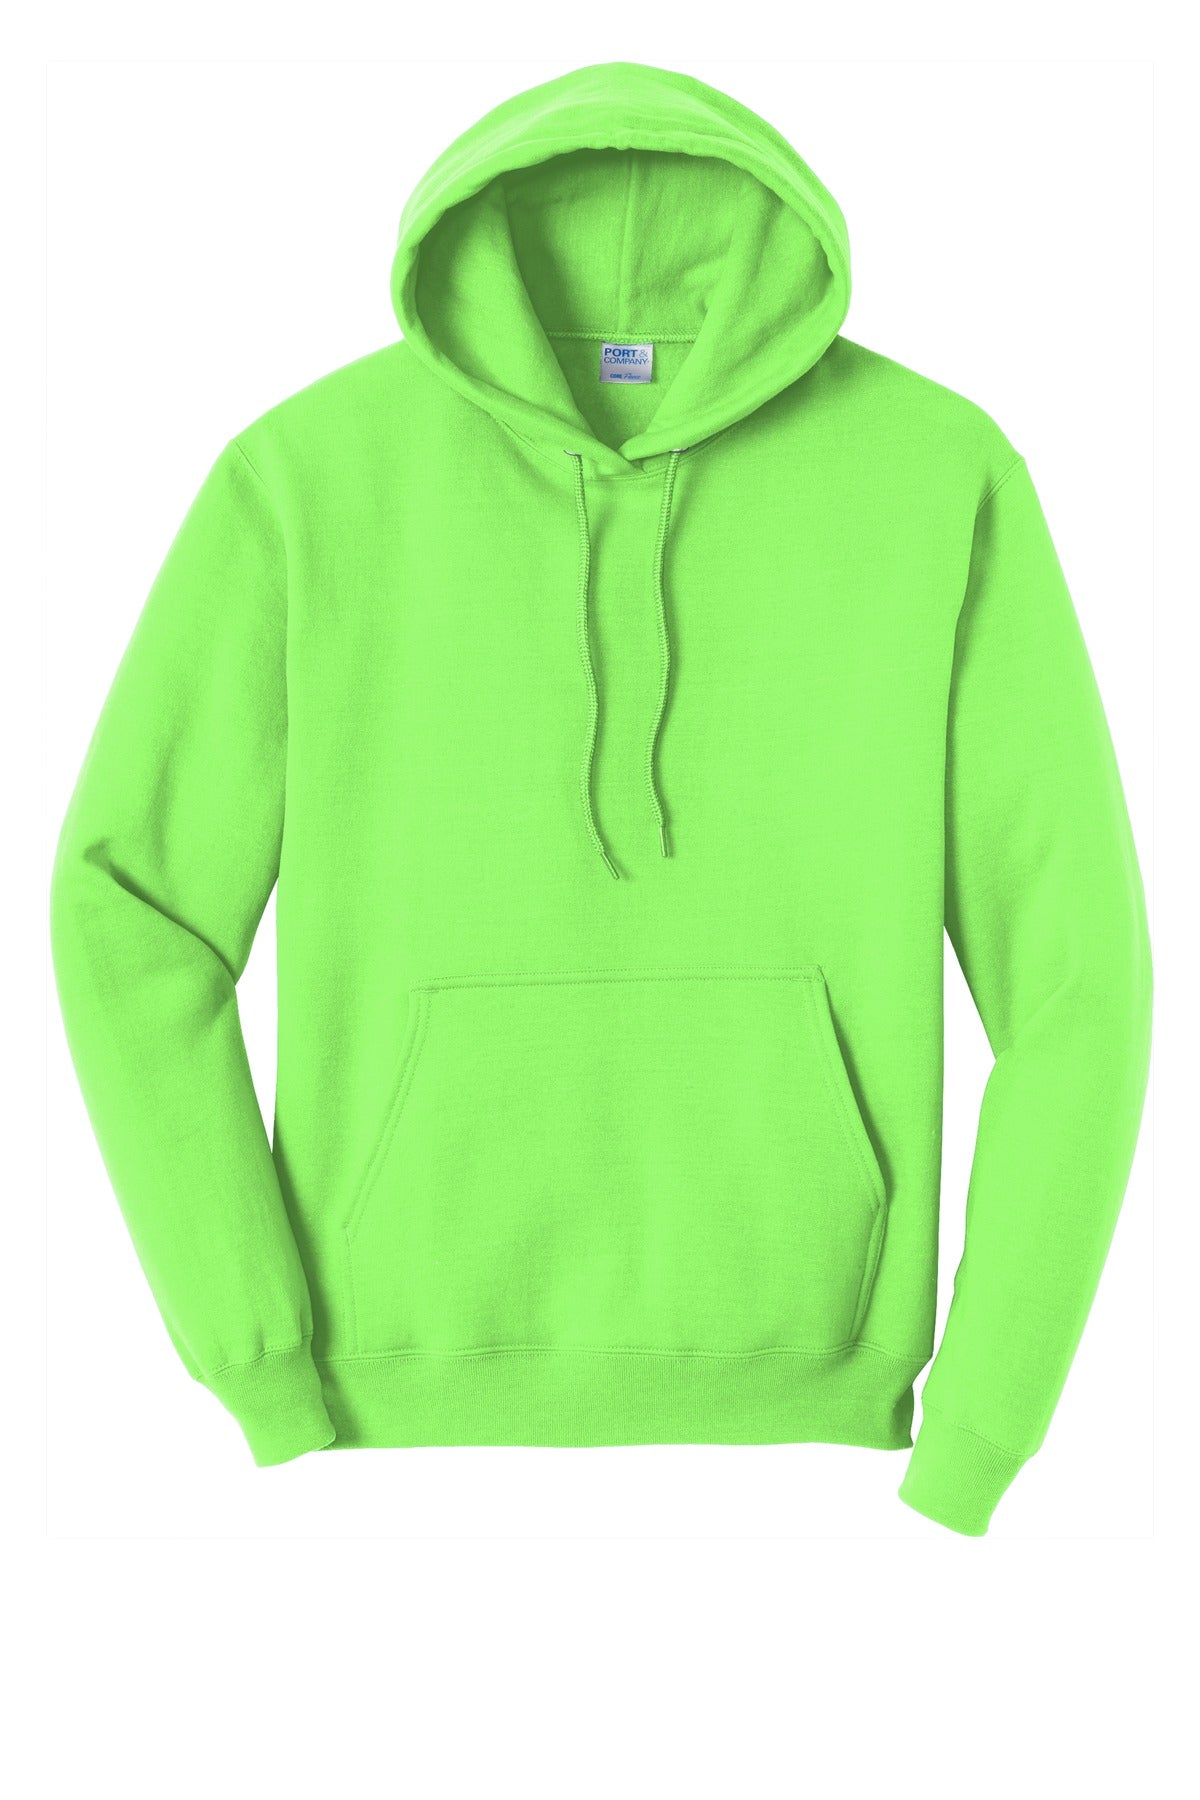 Port & Company - Core Fleece Pullover Hooded Sweatshirt. PC78H - Neon Green